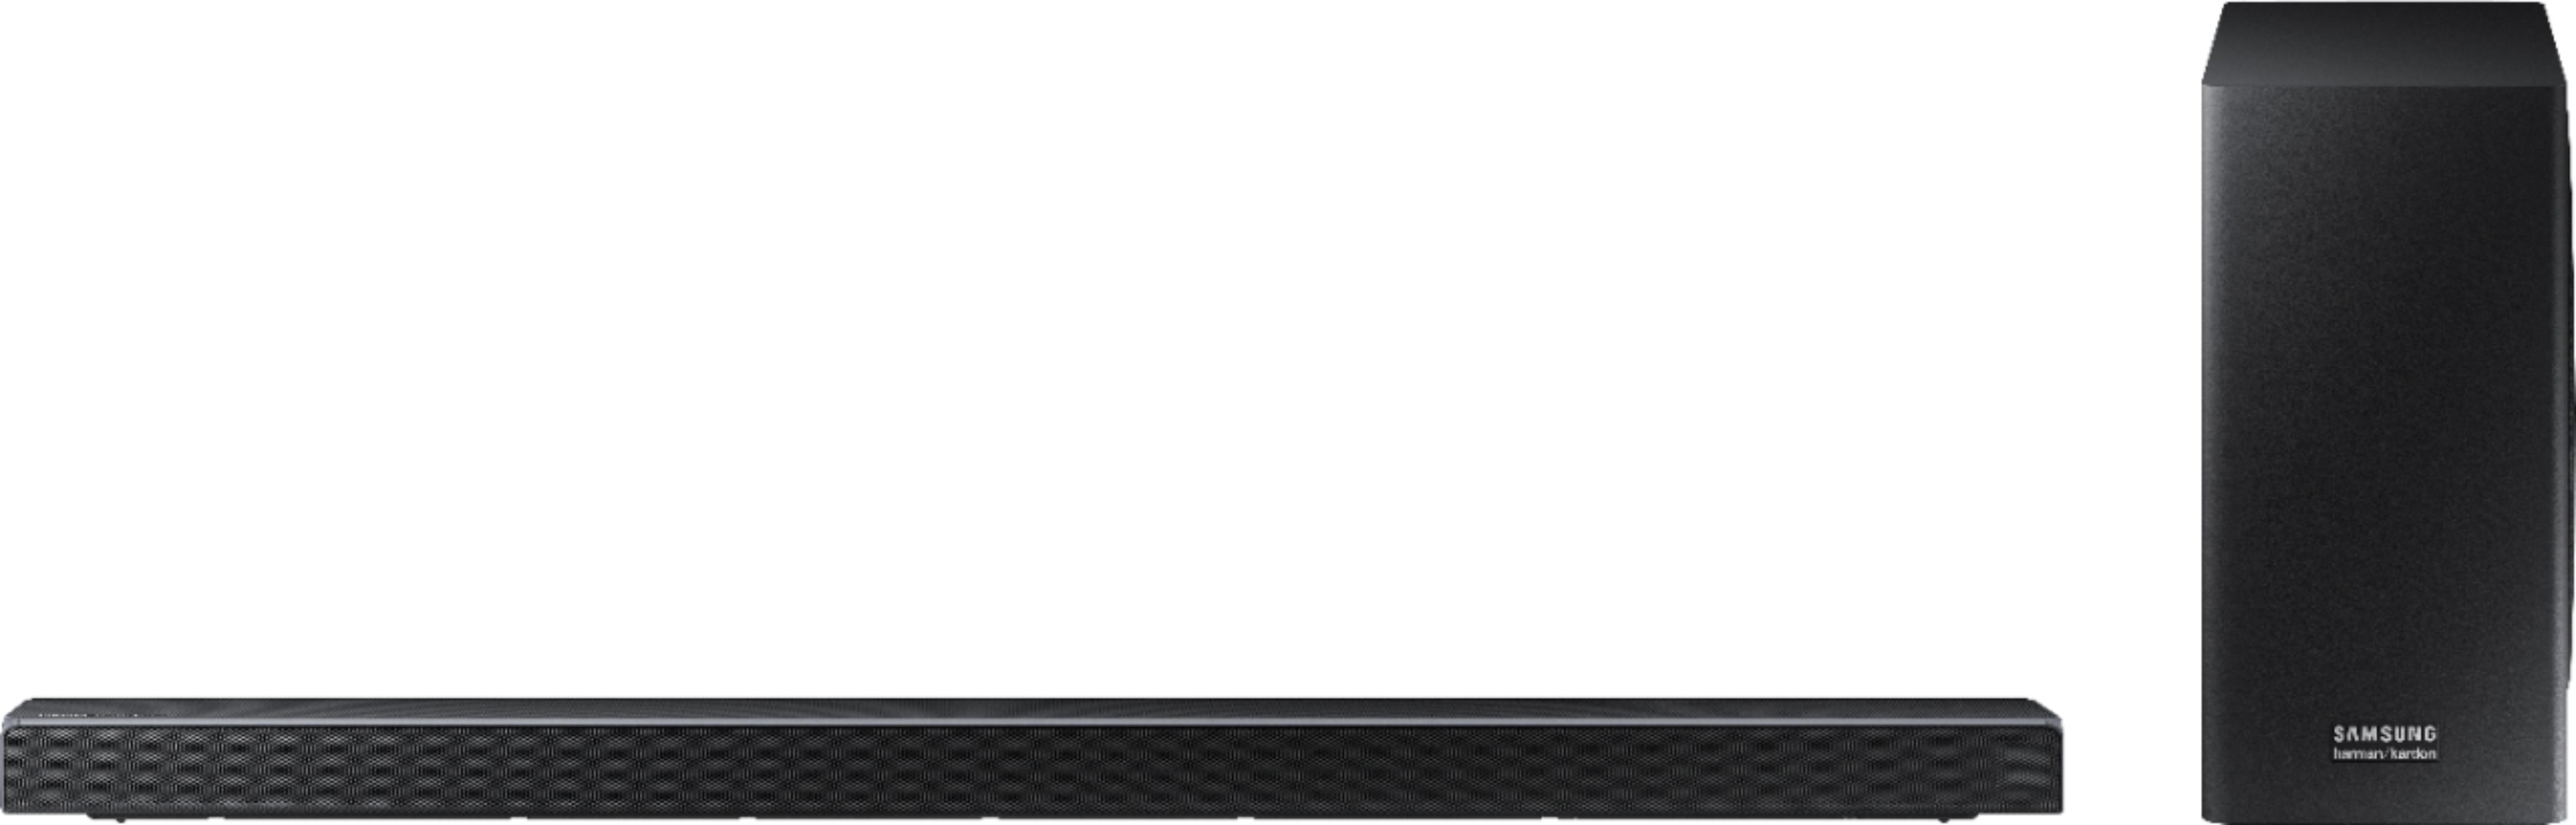 Samsung Harman Kardon - 3.1.2-Channel 330W Soundbar with 8" Wireless Subwoofer and Dolby Atmos - Slate Black + Carbon Silver